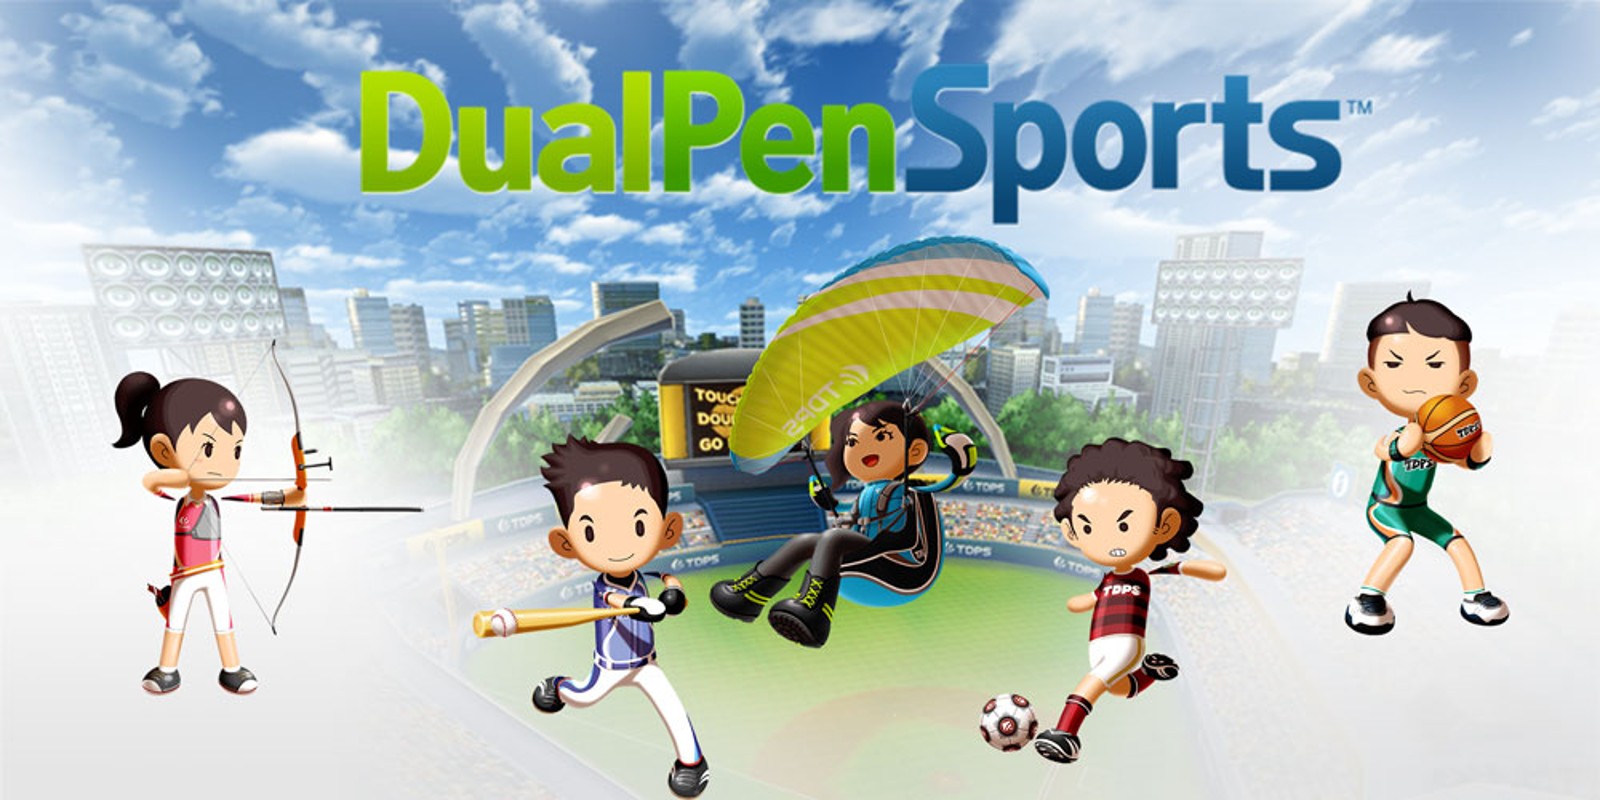 DualPenSports™